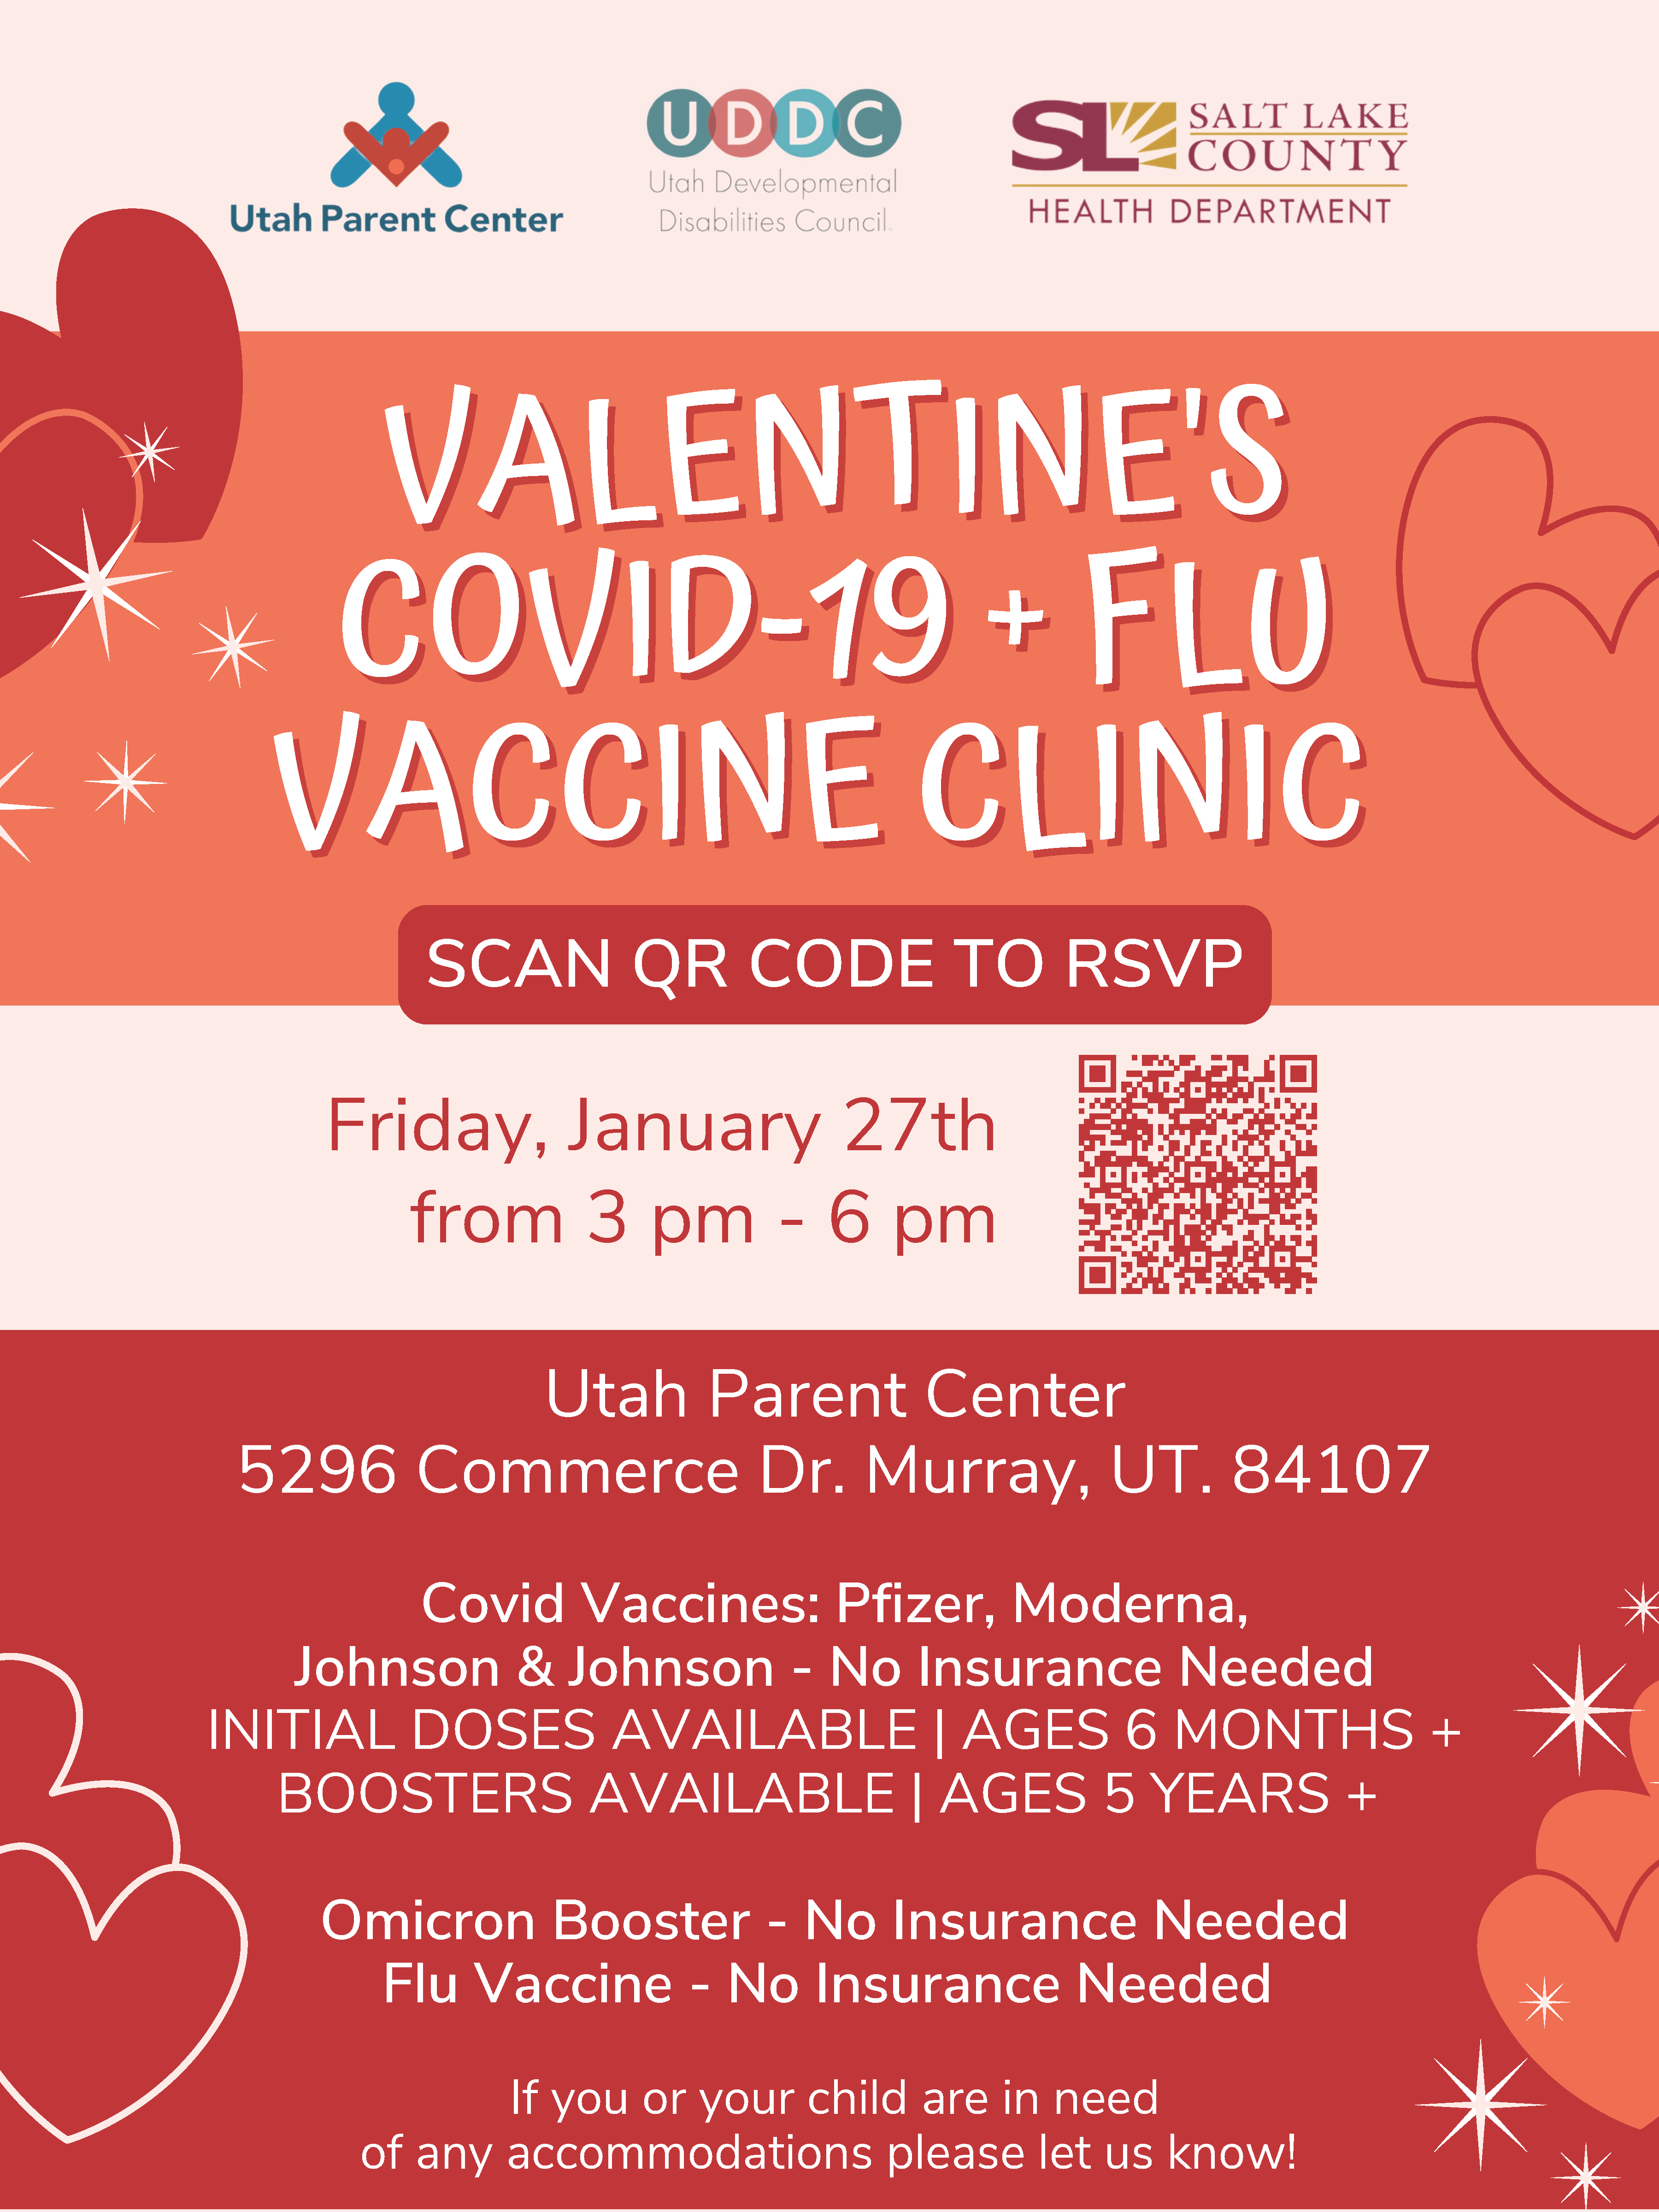 Valentine's Covid-19 + Flu Vaccine Clinic
Friday, January 27th 3-6 PM
Utah Parent Center, 5296 S Commerce Dr, Murray, UT 84107